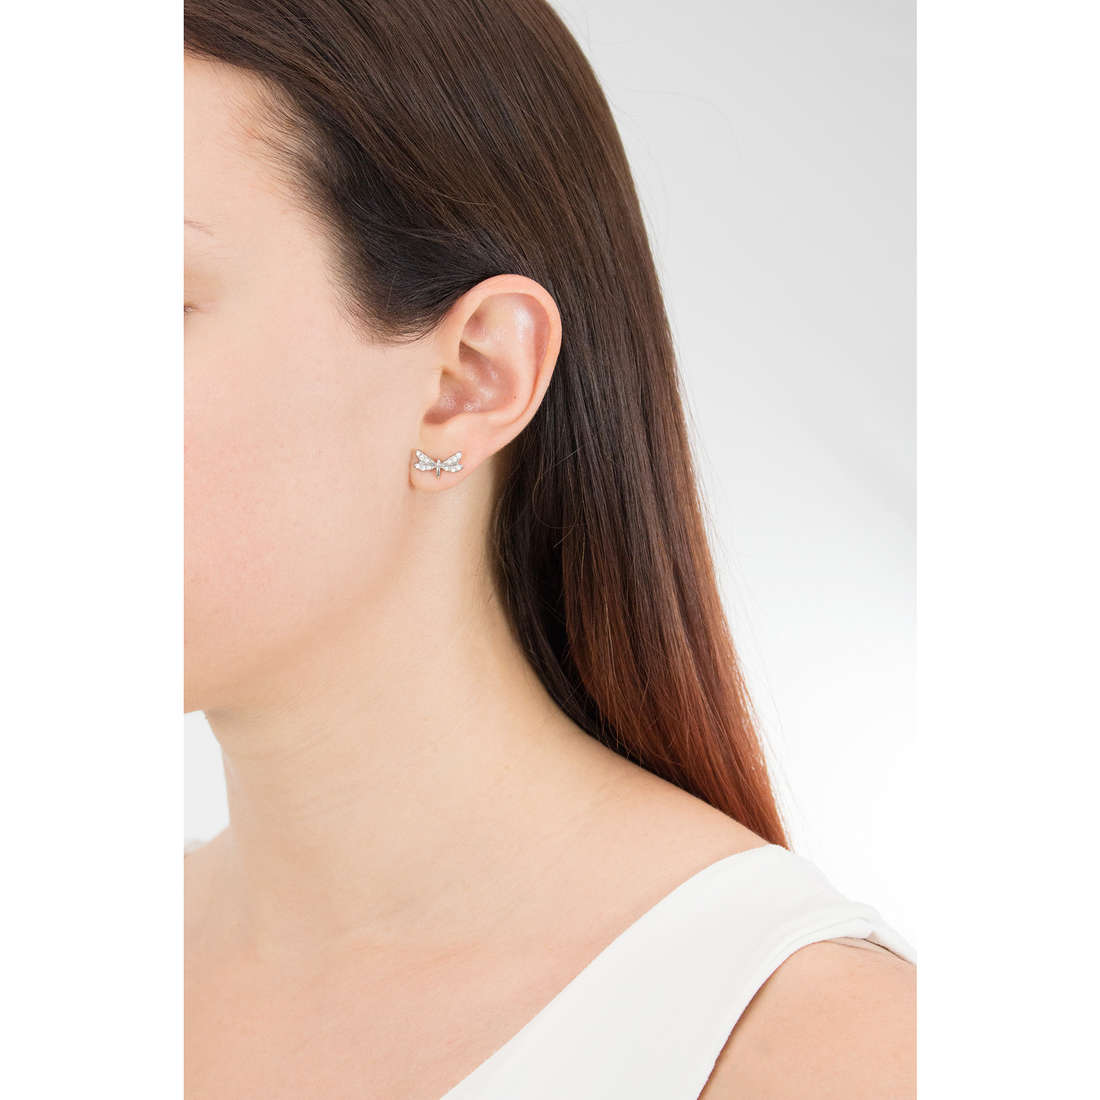 Morellato earrings Ninfa woman SAJA06 wearing